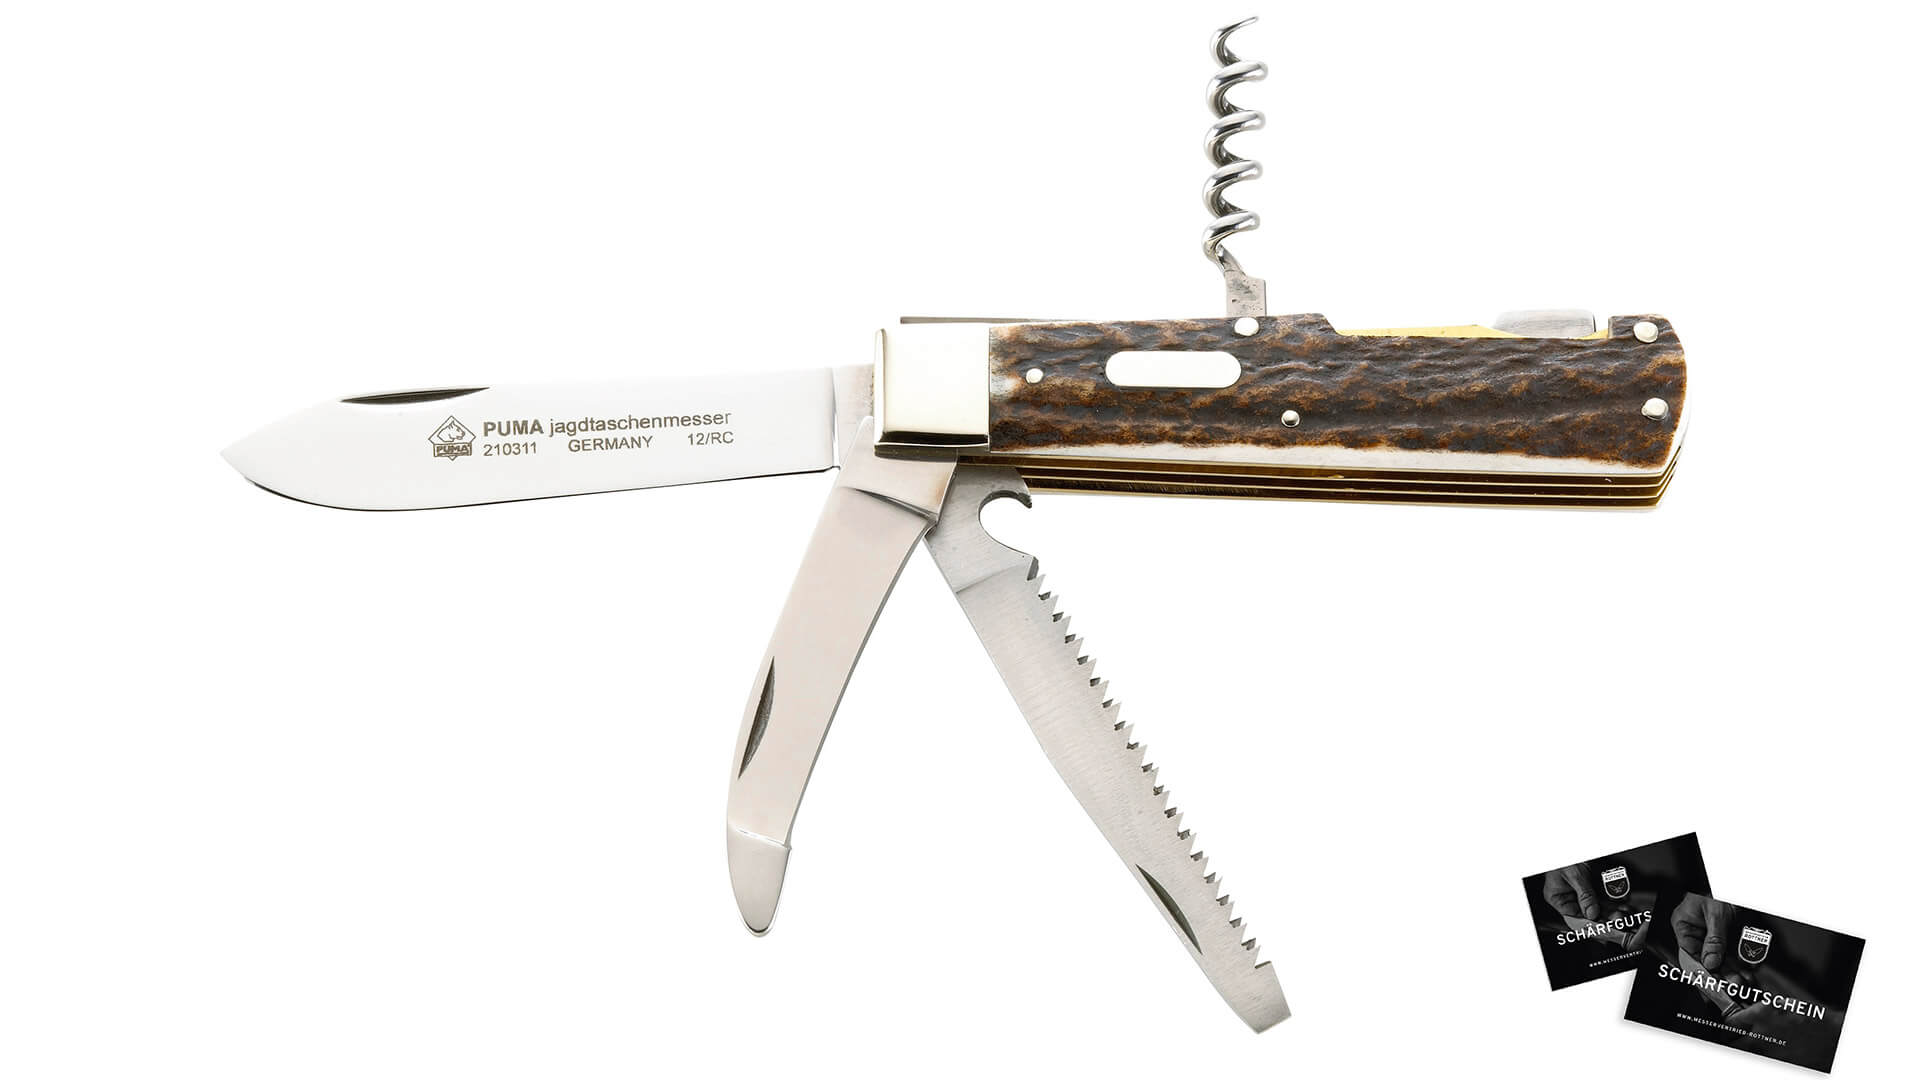 Puma pocket knife 4-piece ✓ Real all-rounder ✓